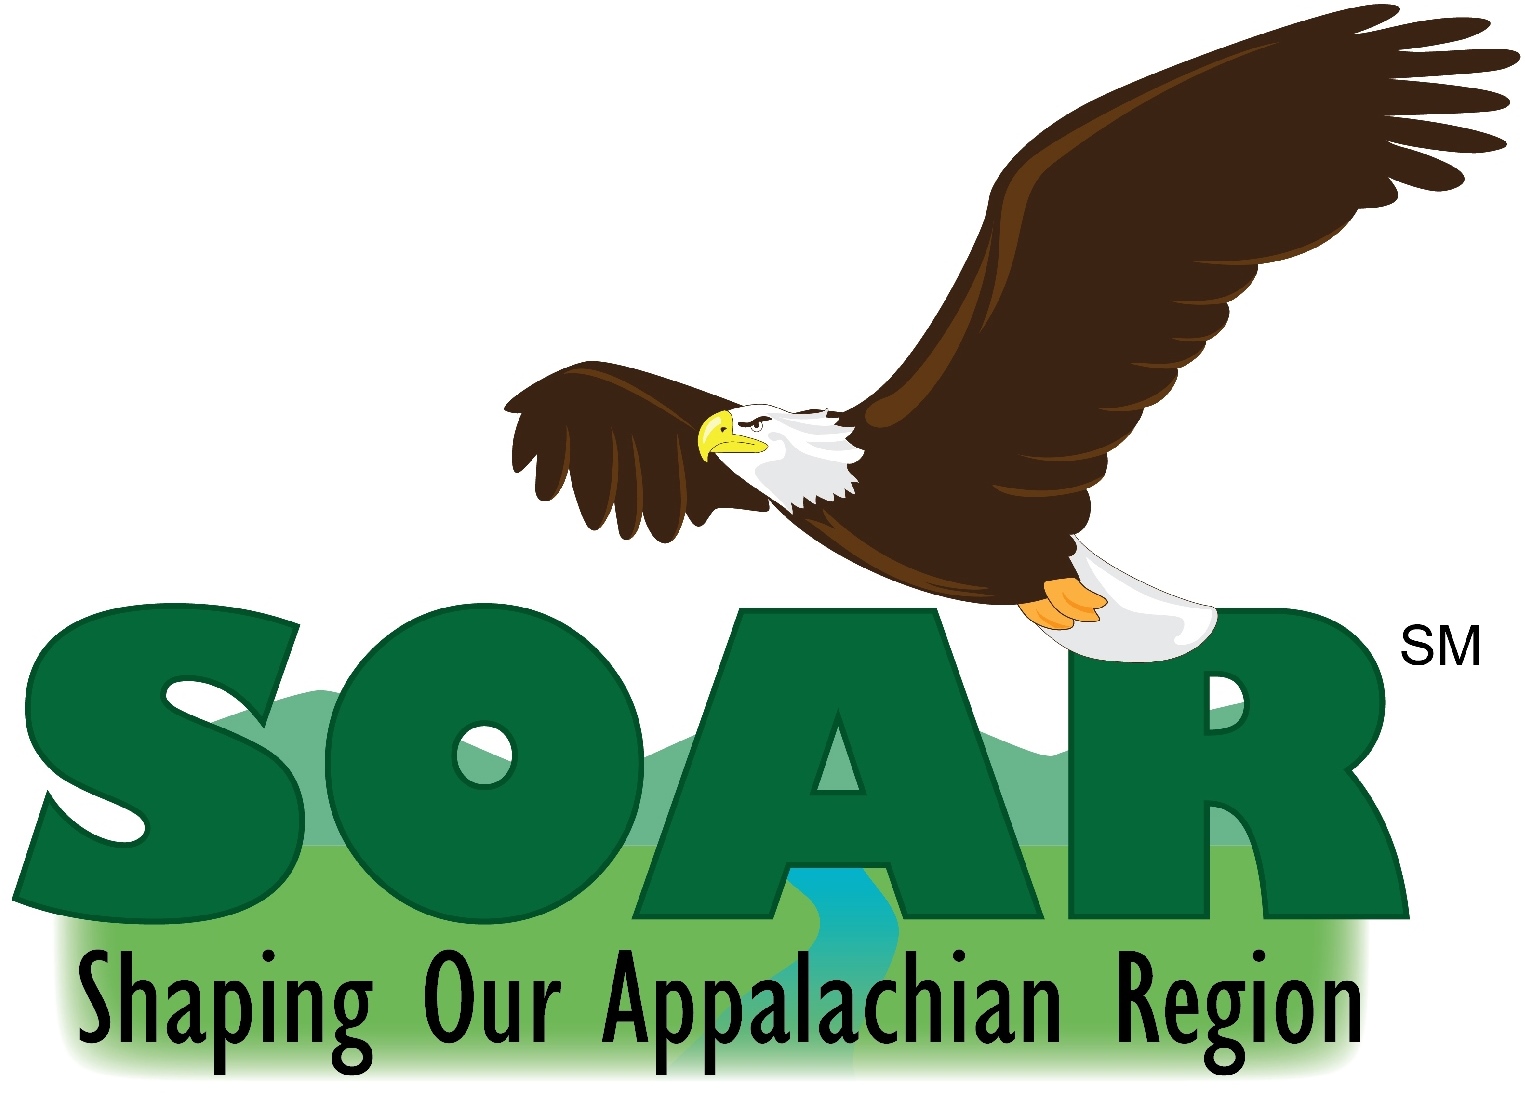 University of Louisville, KentuckyOne Health become presenting partners of SOAR